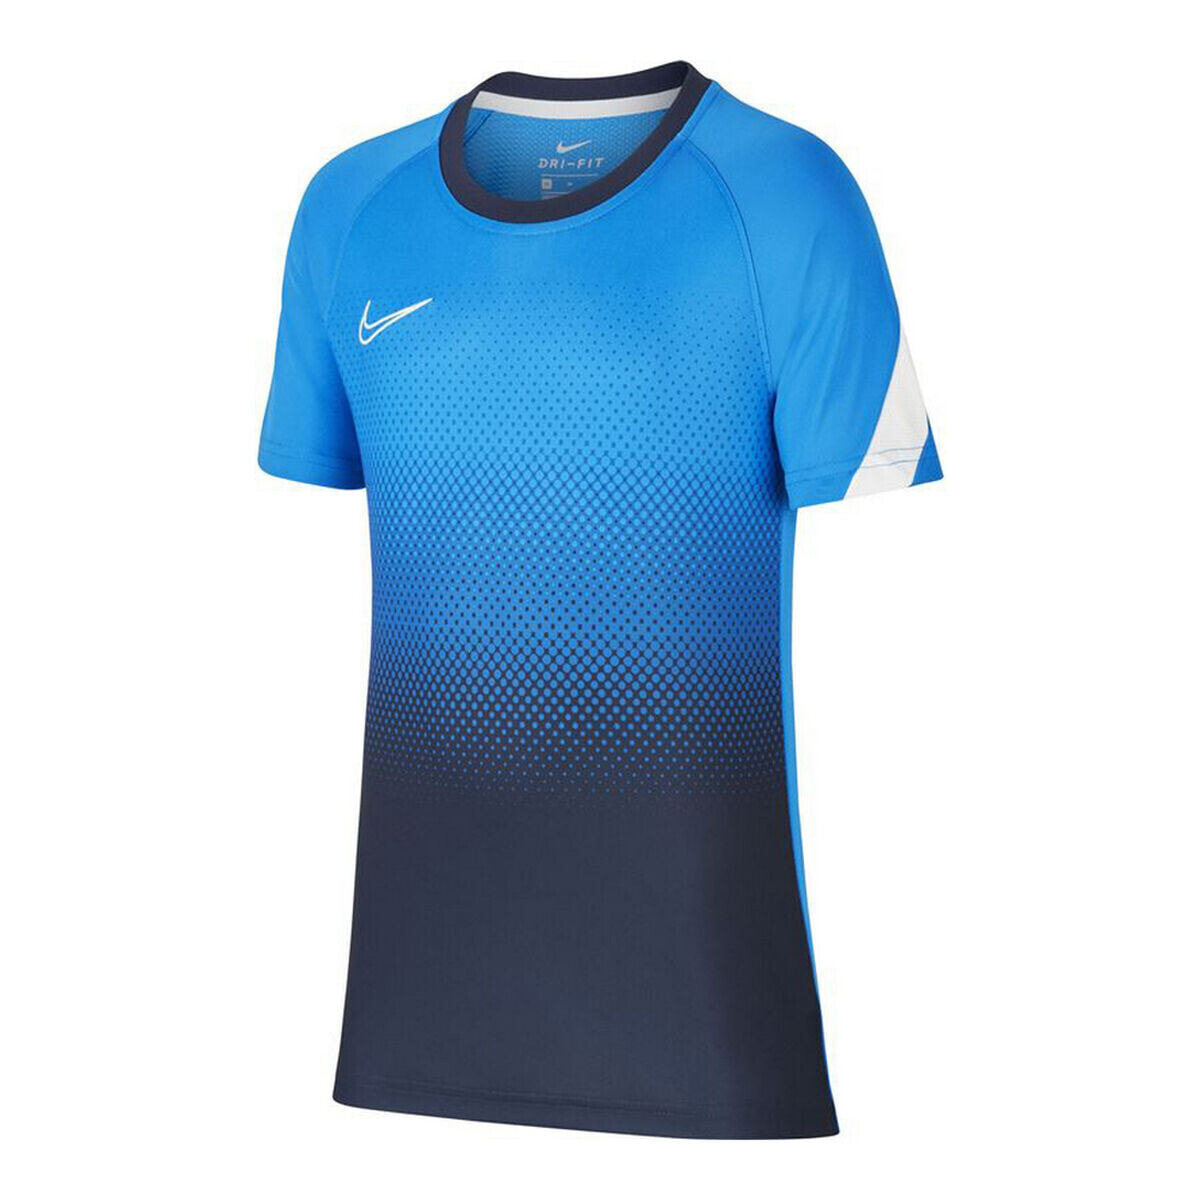 Children's Short Sleeved Football Shirt Nike Dri-FIT Academy Blue